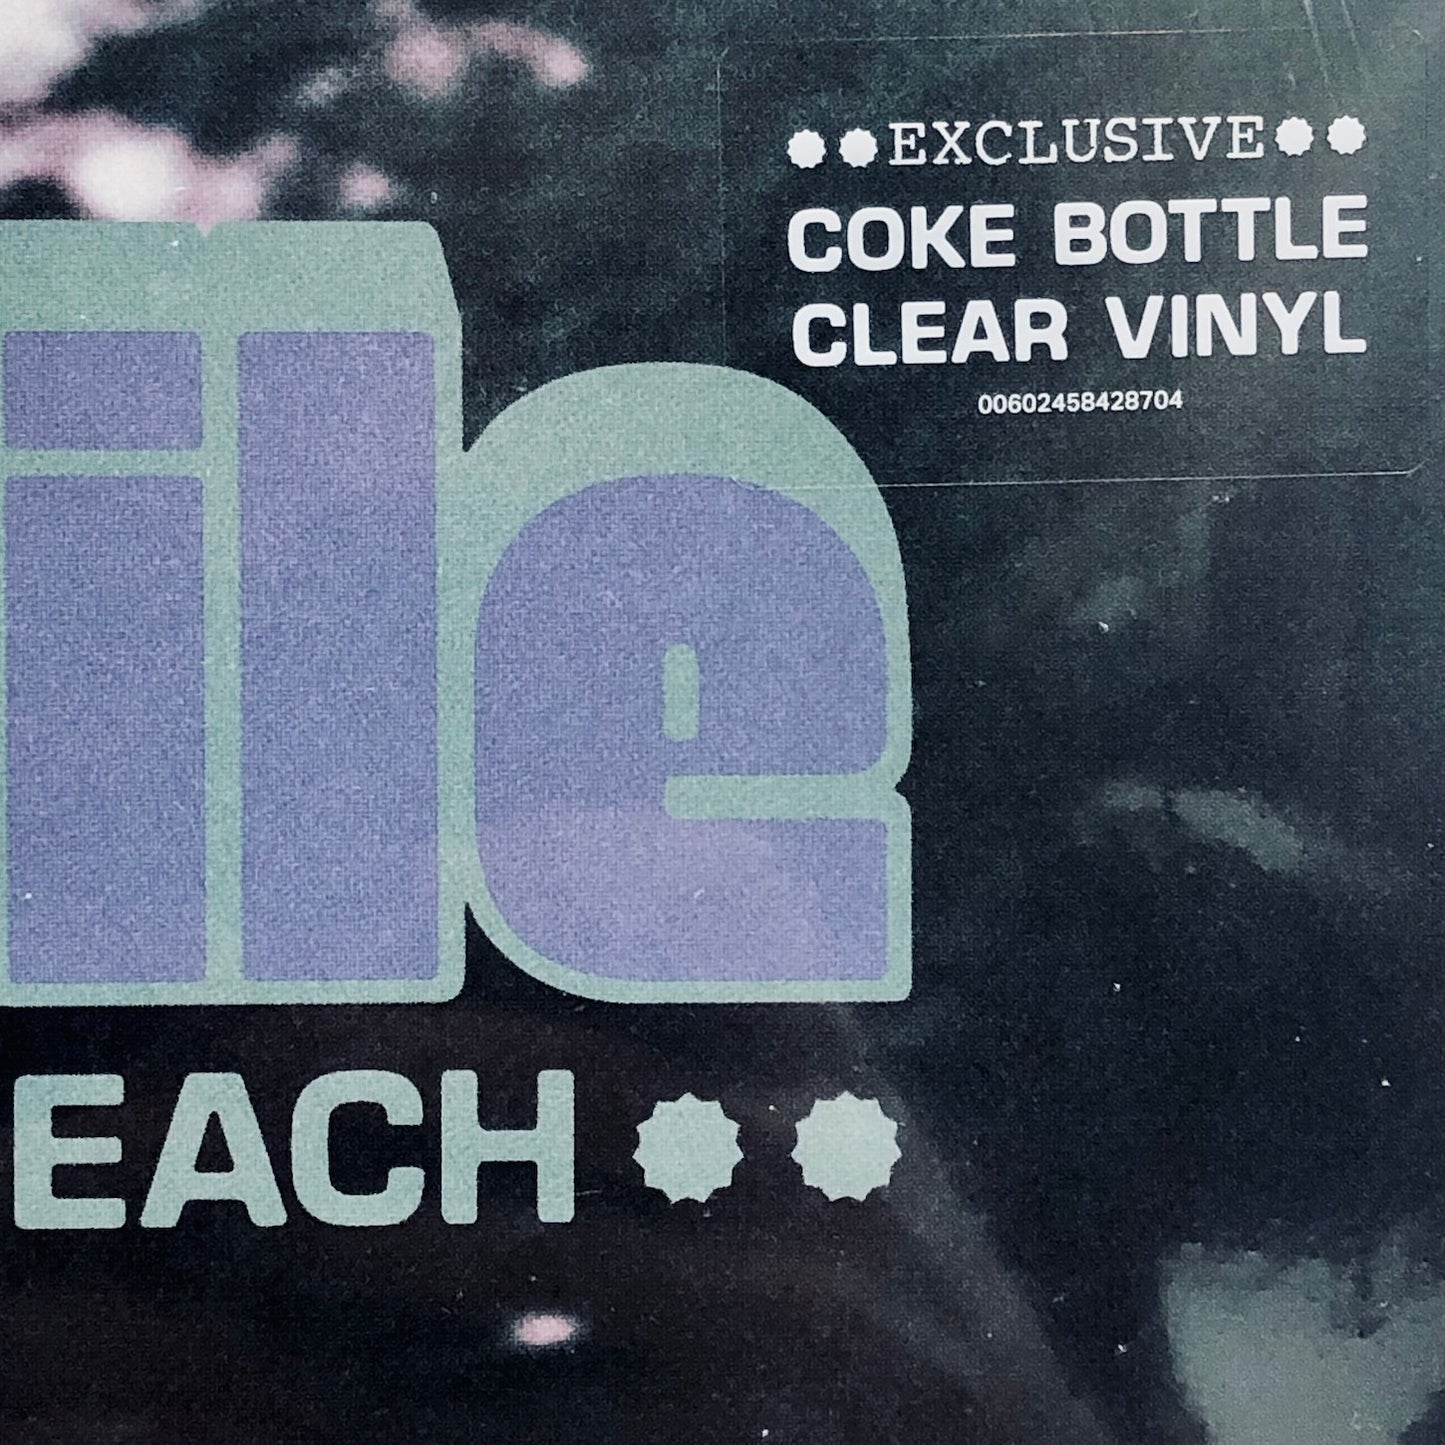 Kurt Vile - Back To Moon Beach. EP [Ltd. Ed. Coke Bottle Clear Vinyl]